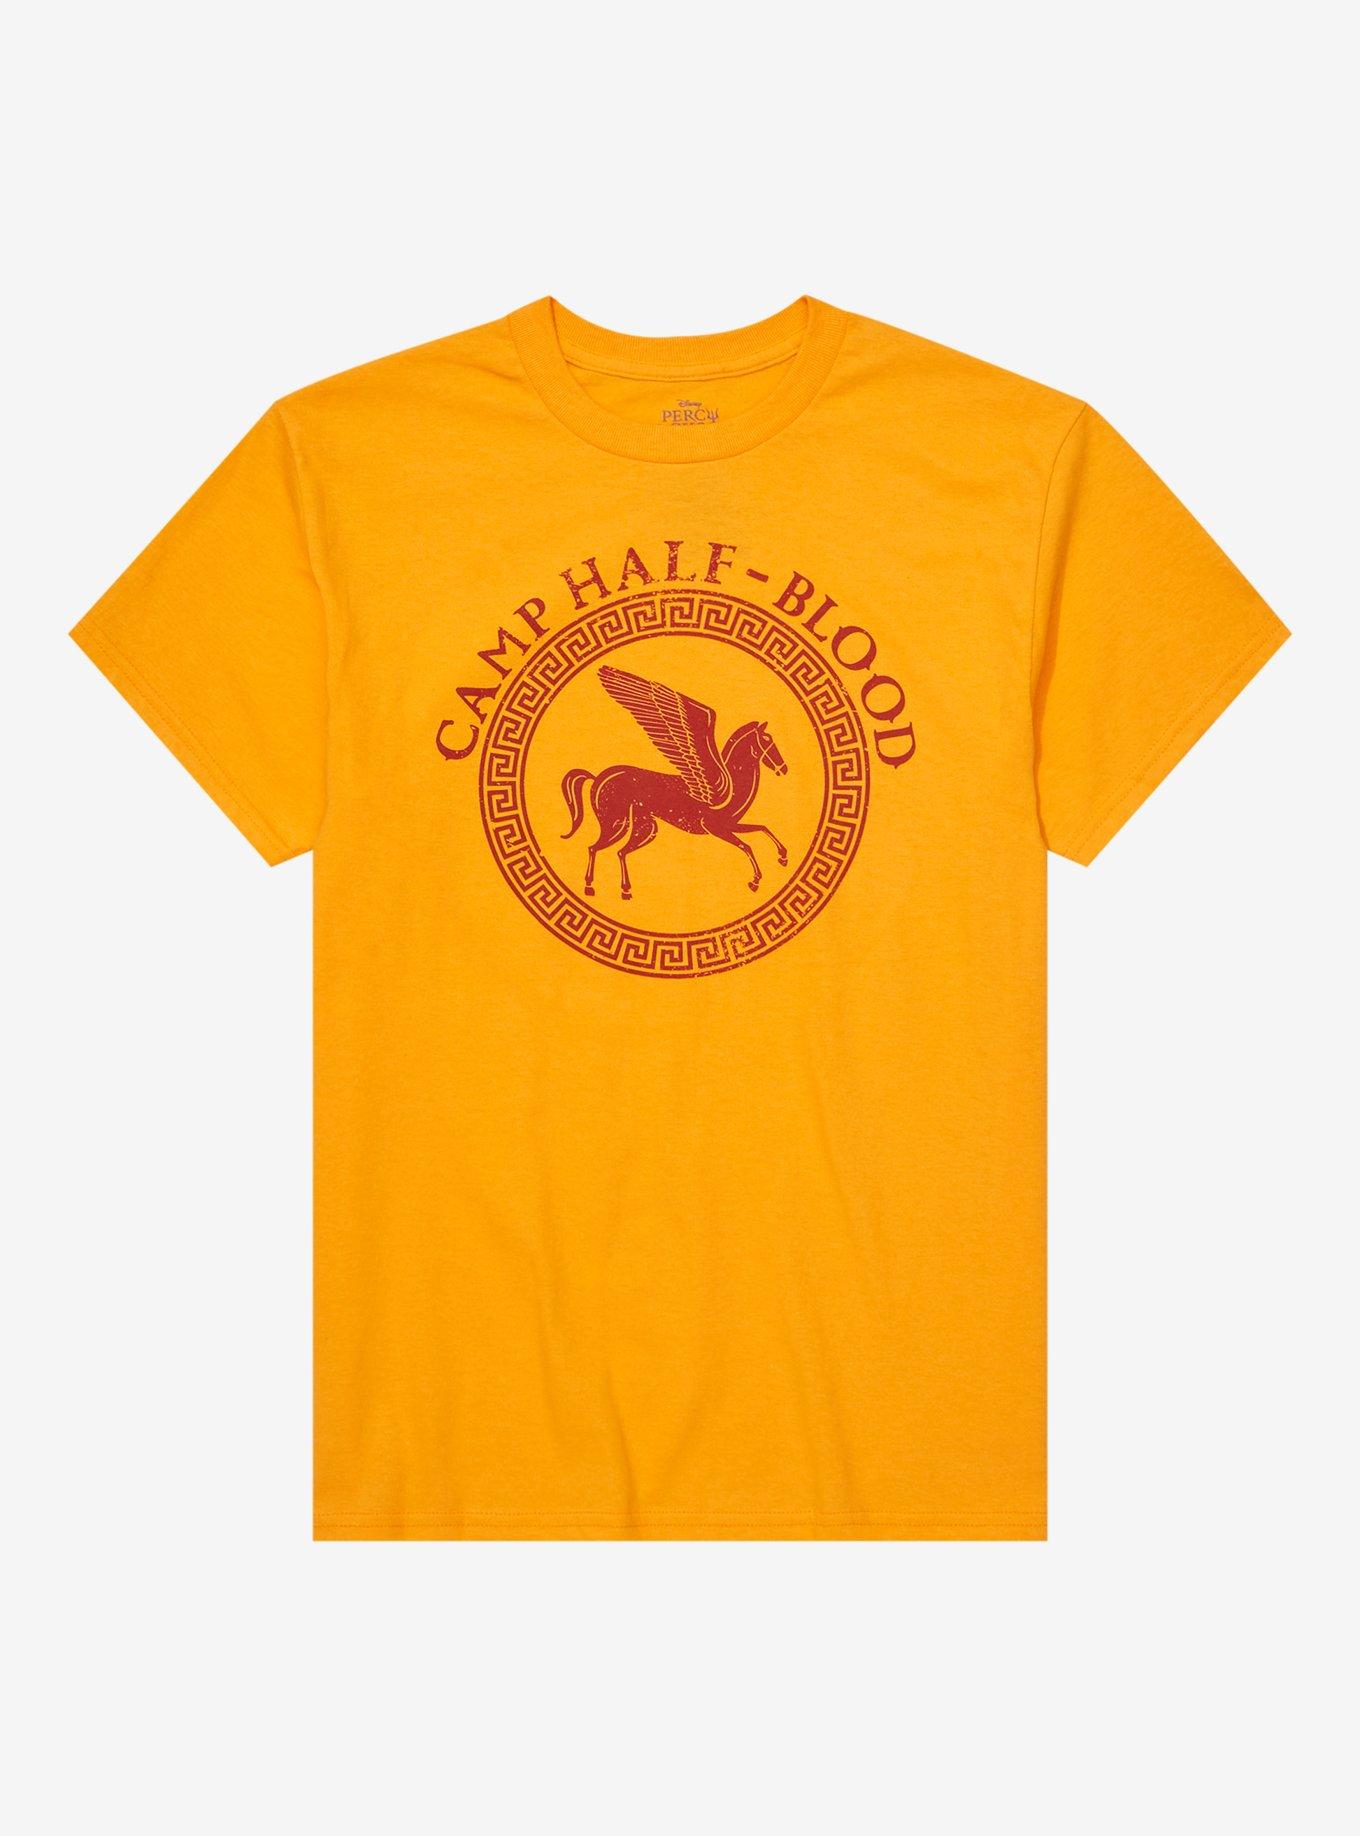 Camp Halfblood Shirt, Camp Half Blood Shirt, Percy Jackson S